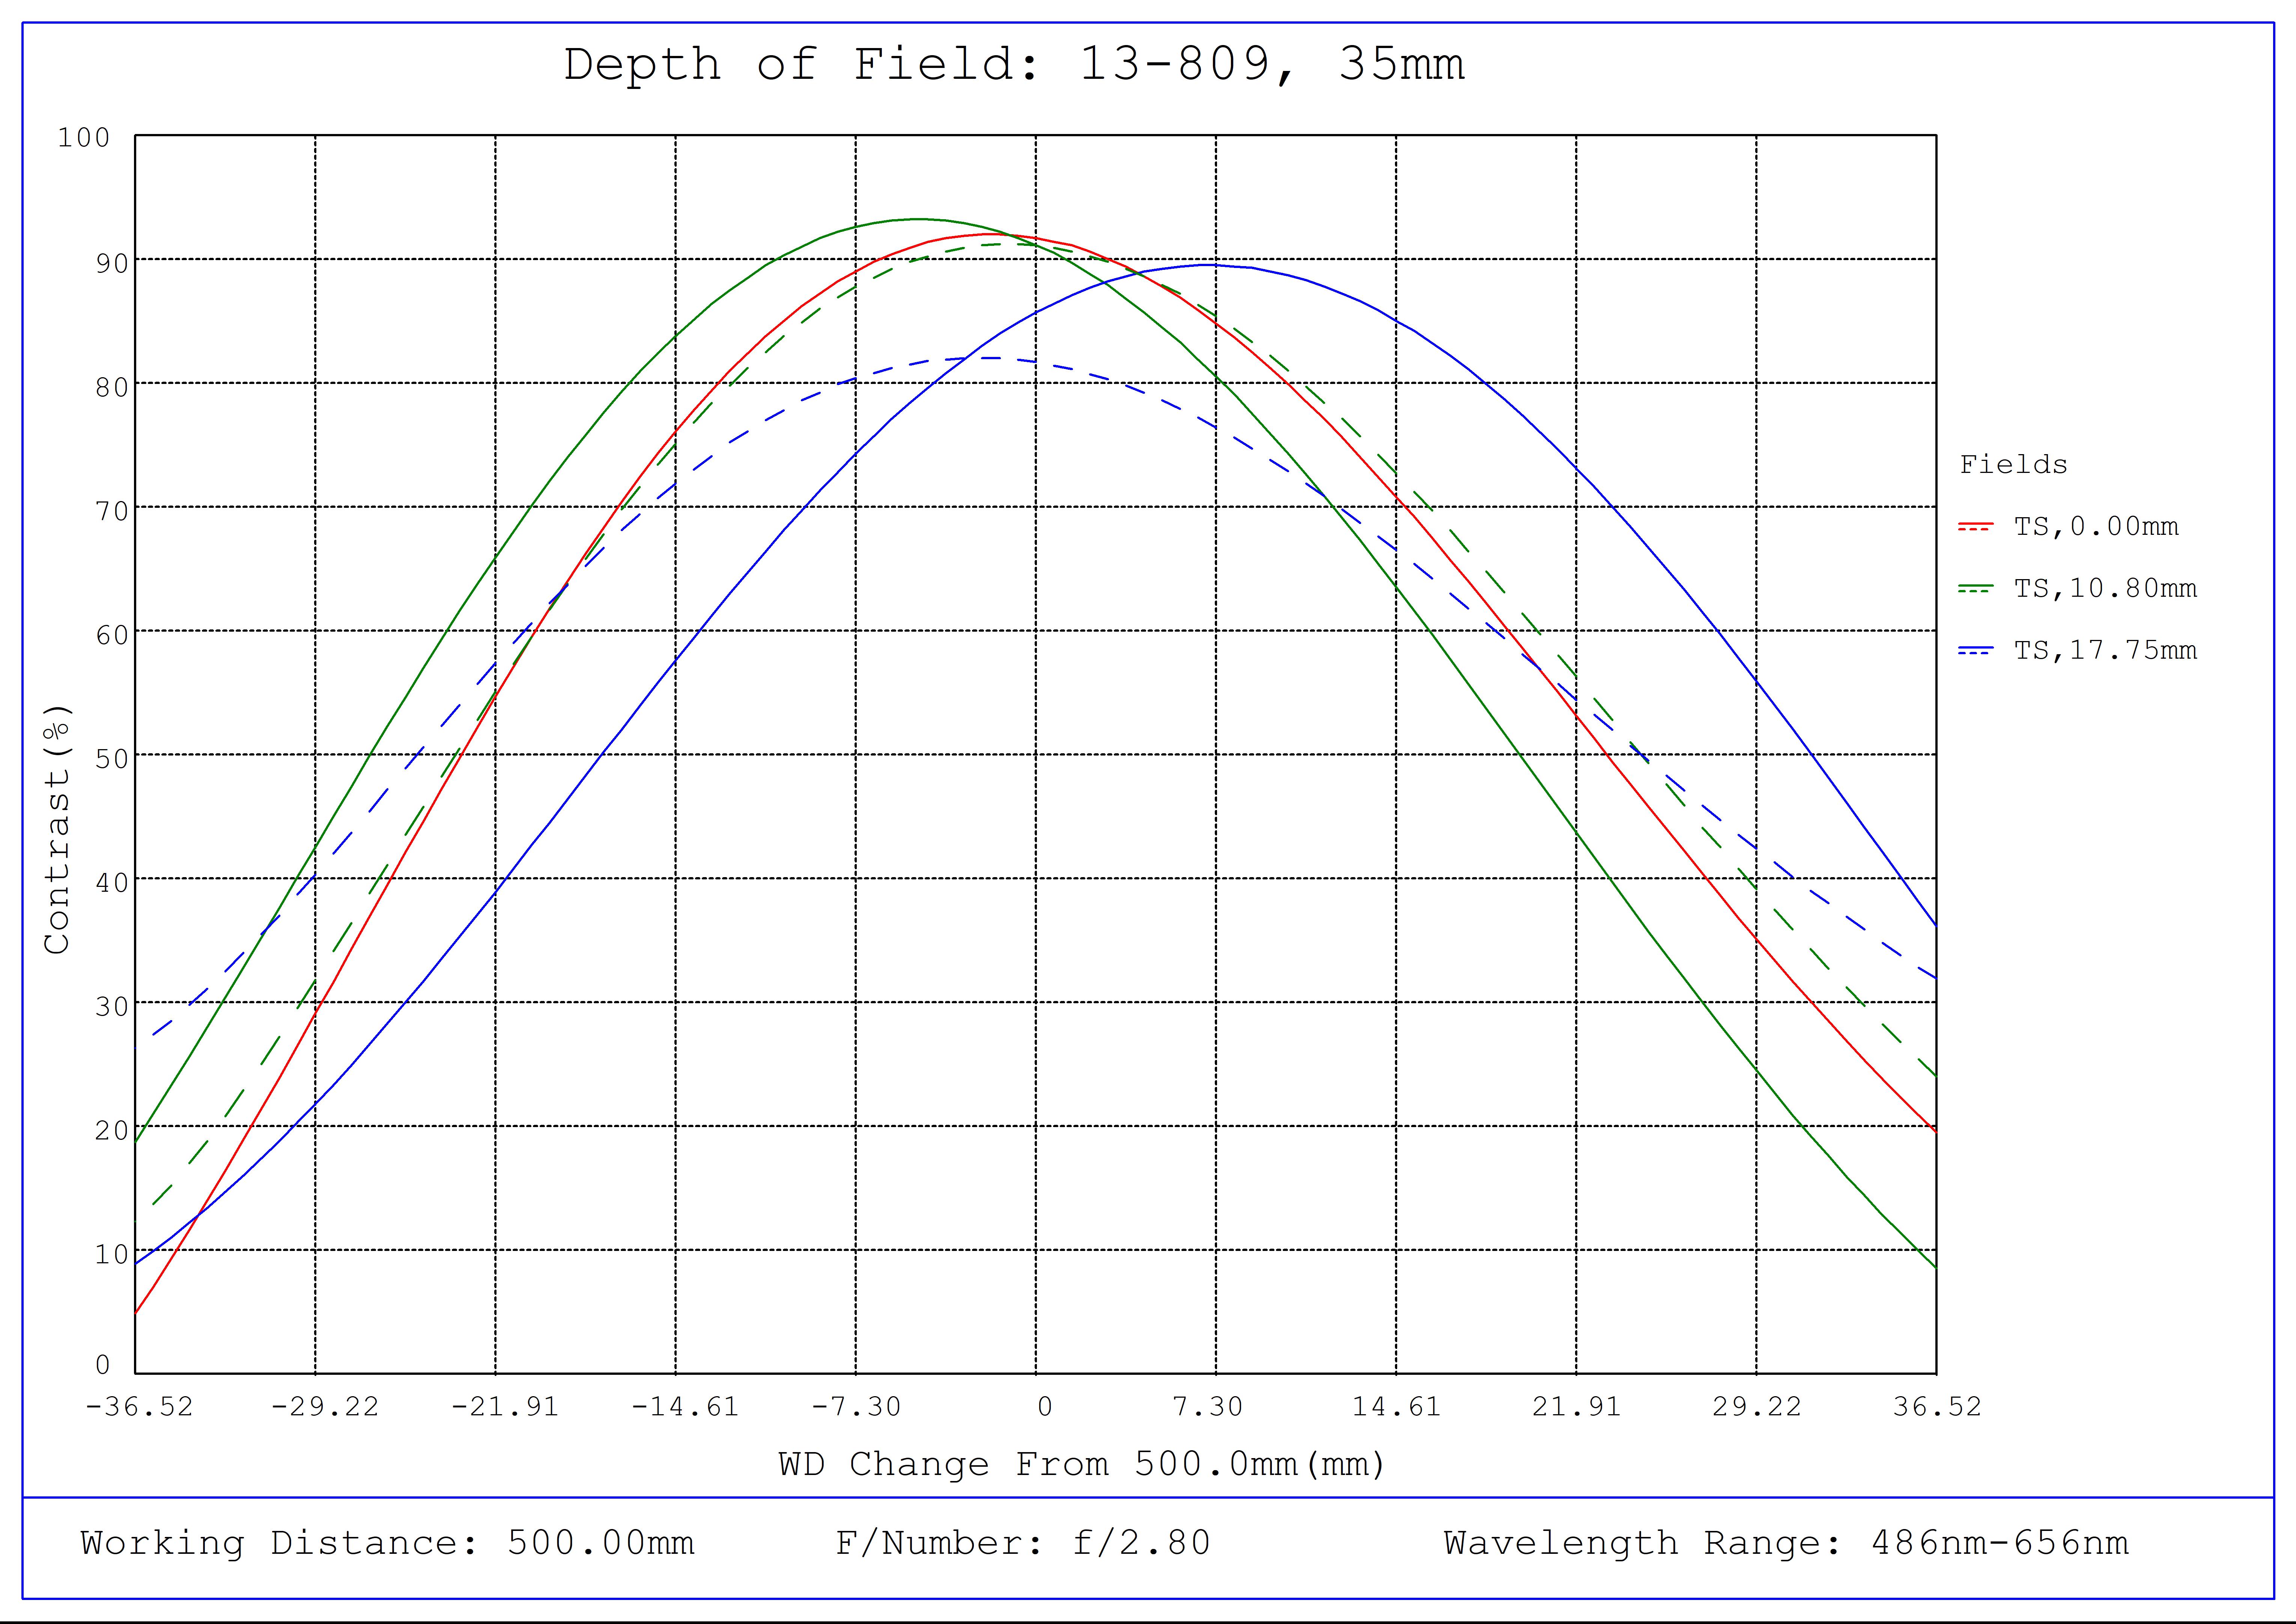 #13-809, 35mm TFL-II Mount LH Series Fixed Focal Length Lens, Depth of Field Plot, 500mm Working Distance, f2.8